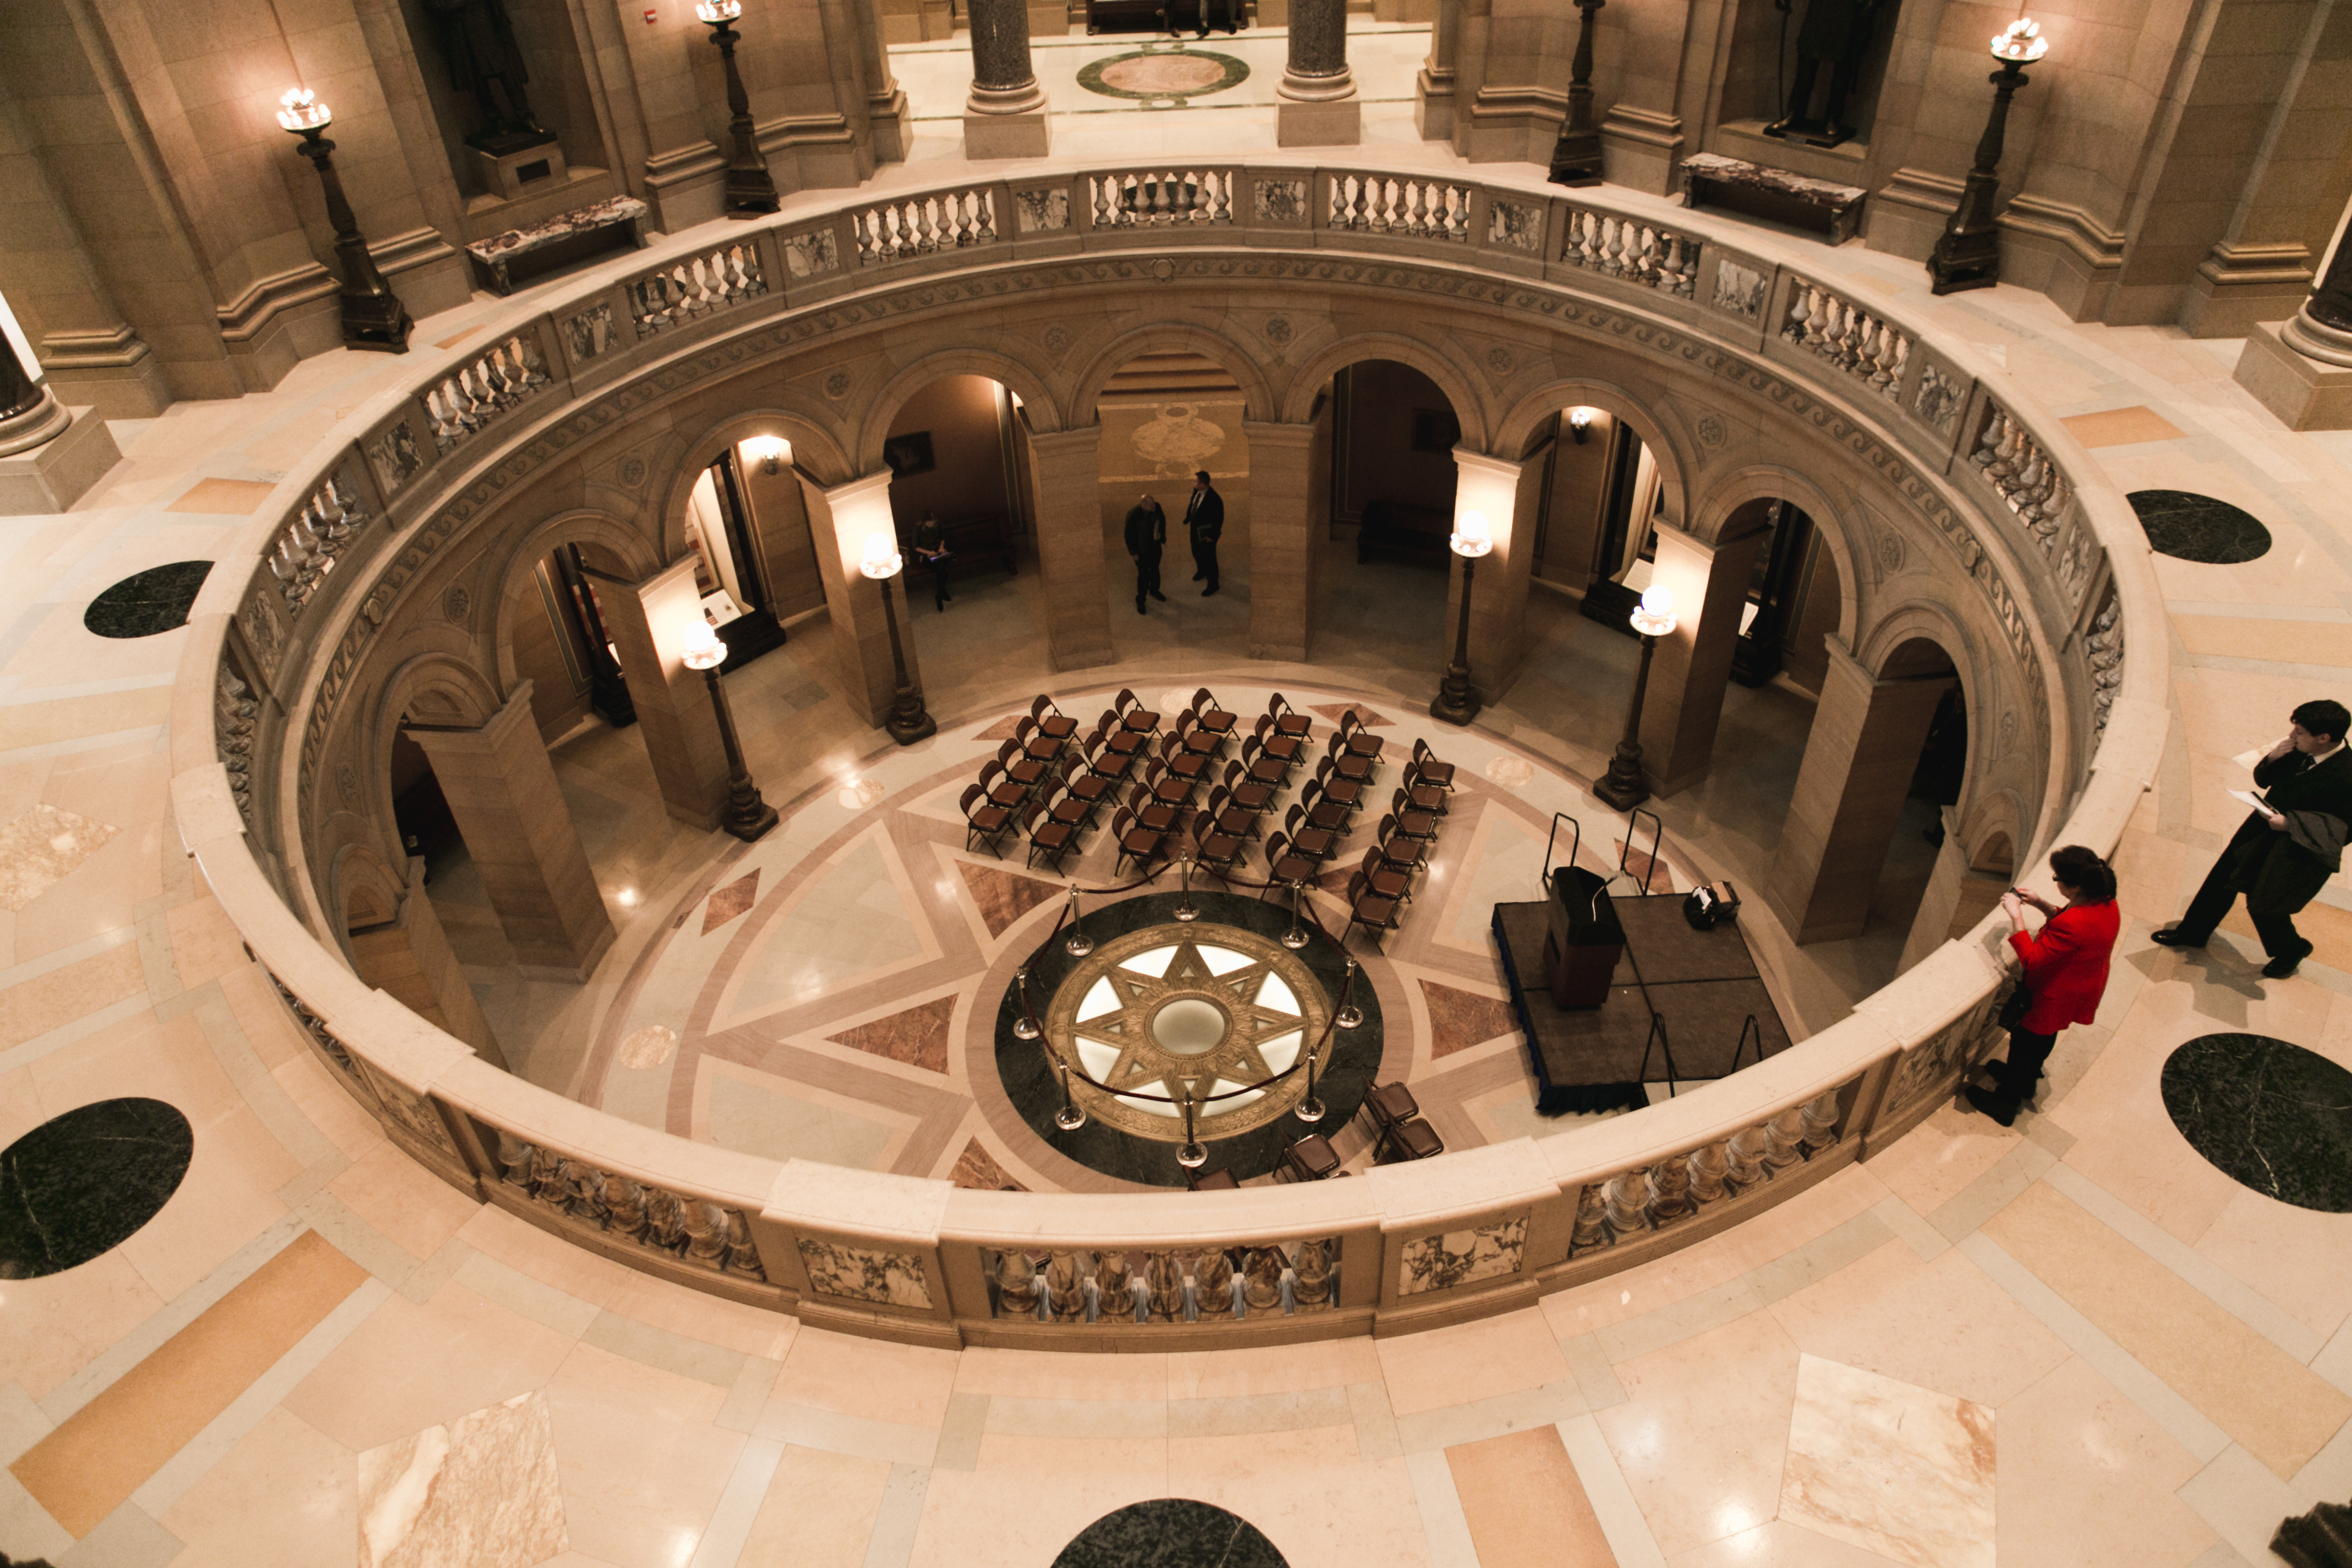 Senators Announce SPED Reform Bills